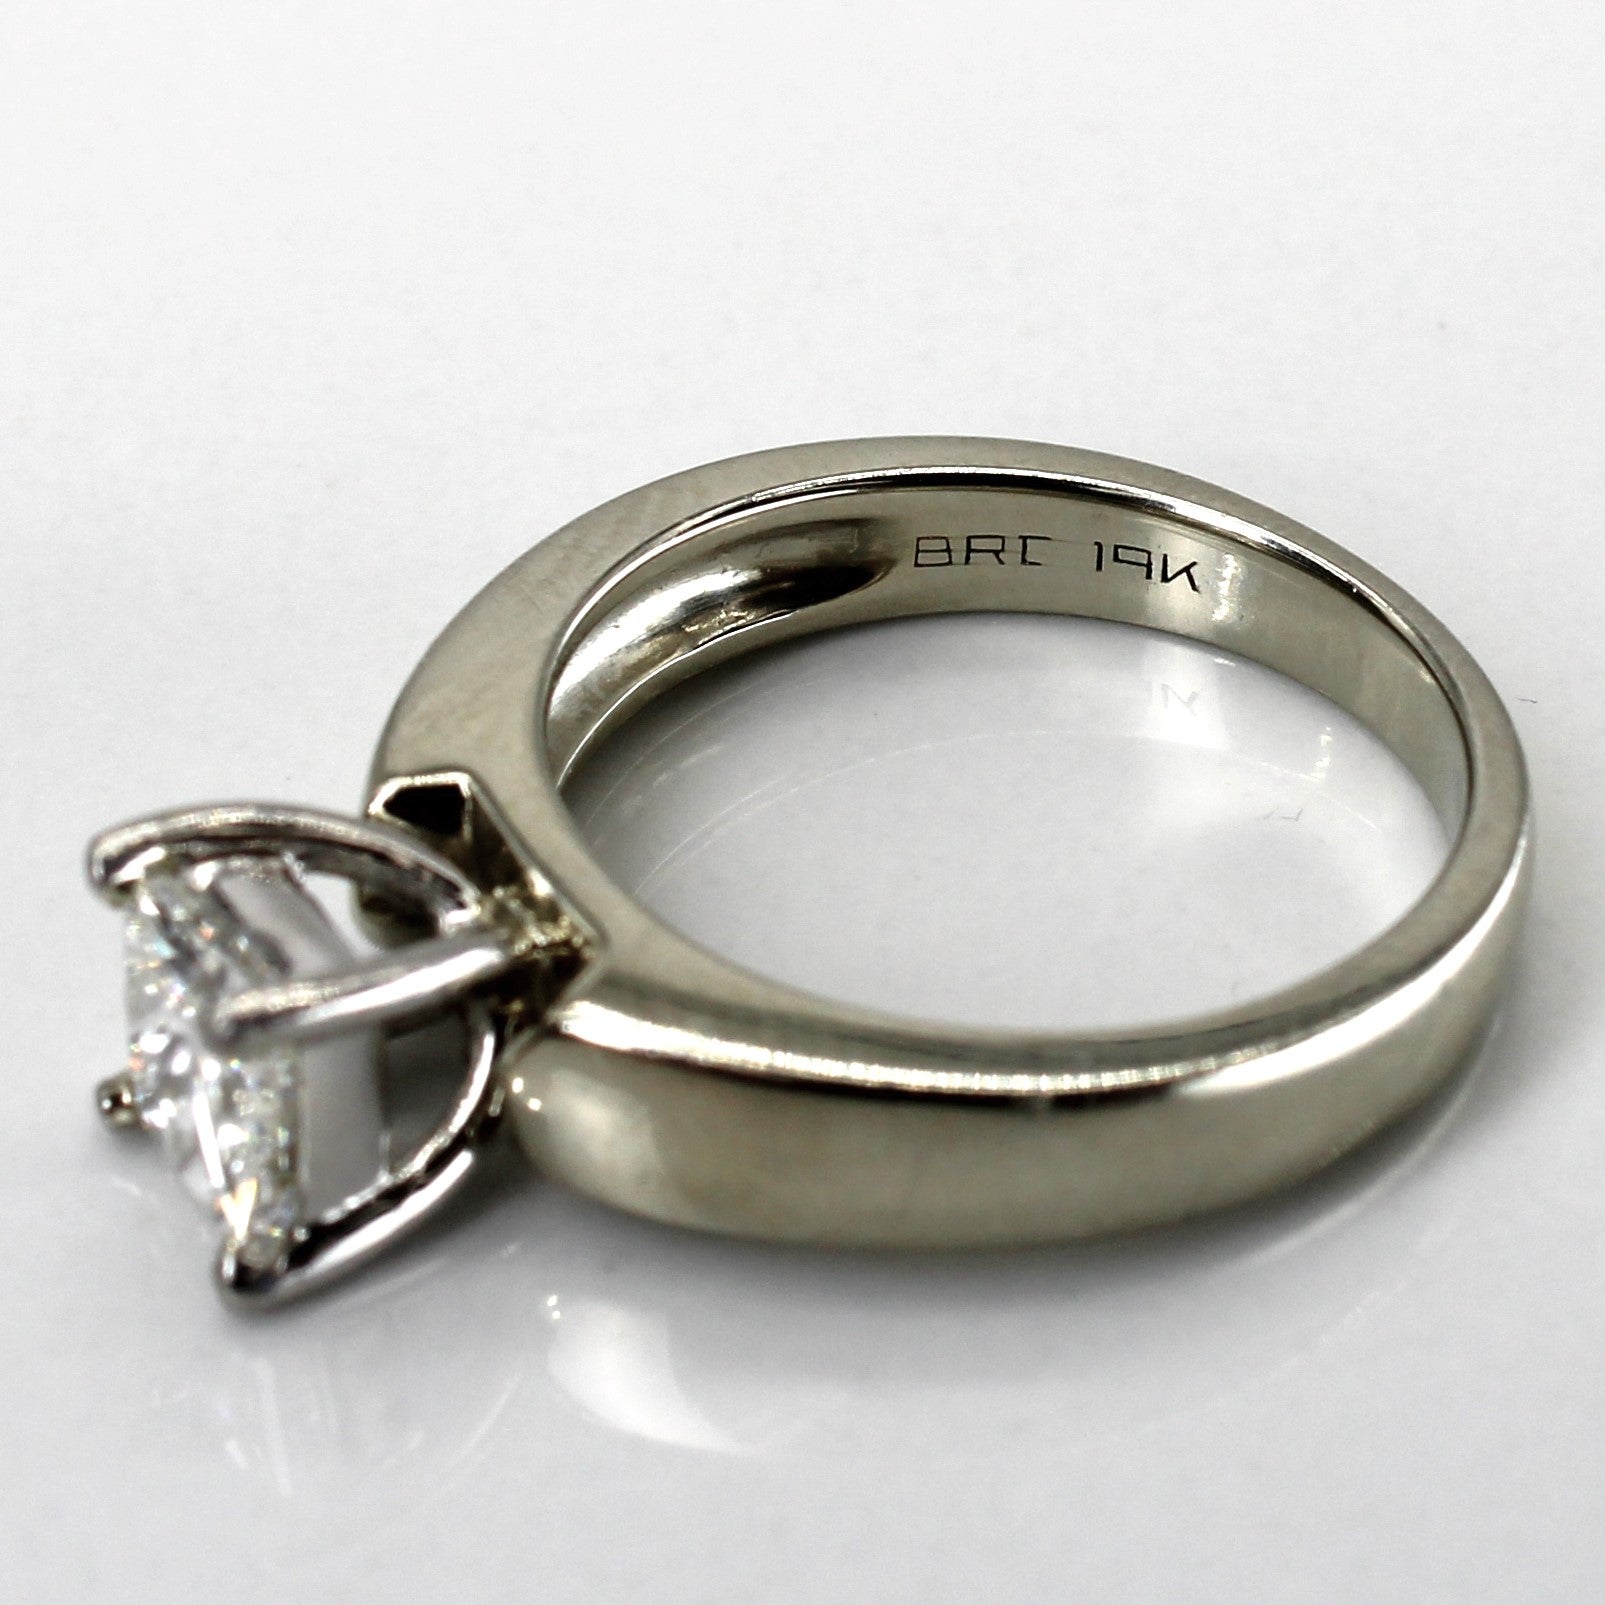 Solitaire Princess Diamond Engagement Ring | 1.02ct | SZ 6 |